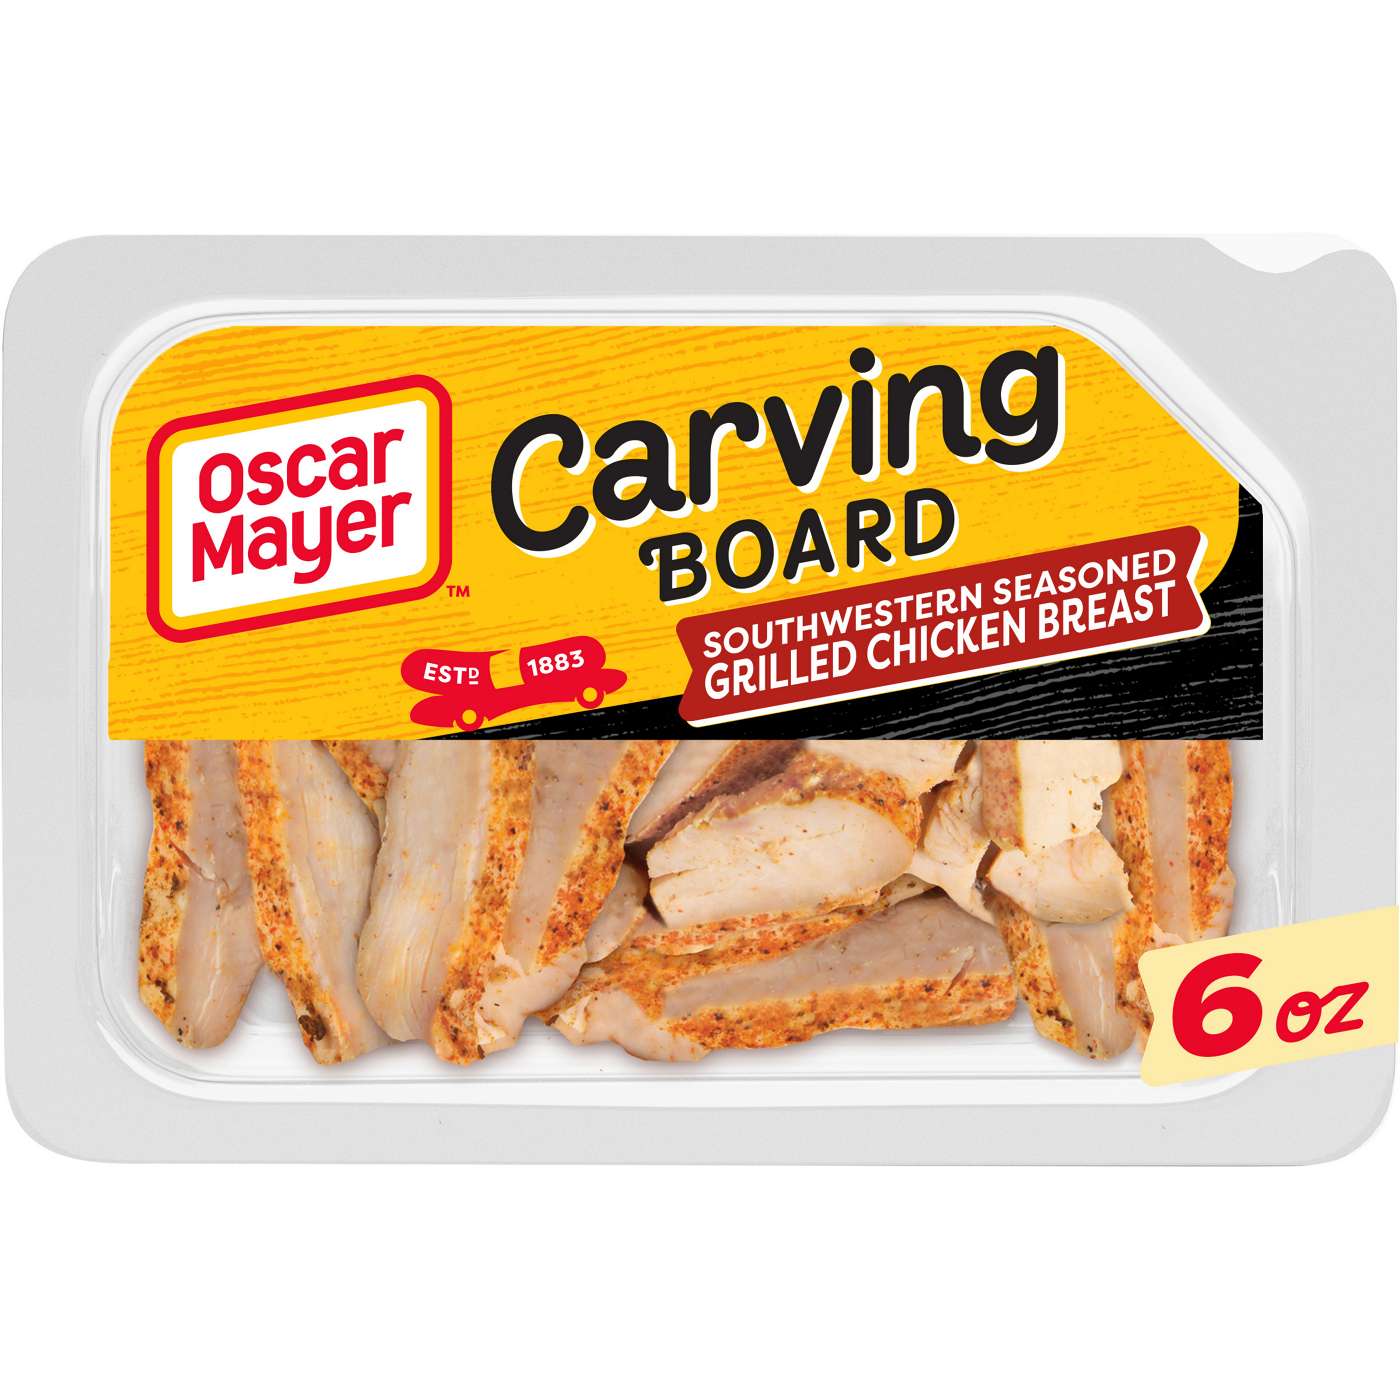 Oscar Mayer Carving Board Southwestern Seasoned Grilled Chicken Breast Strips Lunch Meat; image 1 of 3